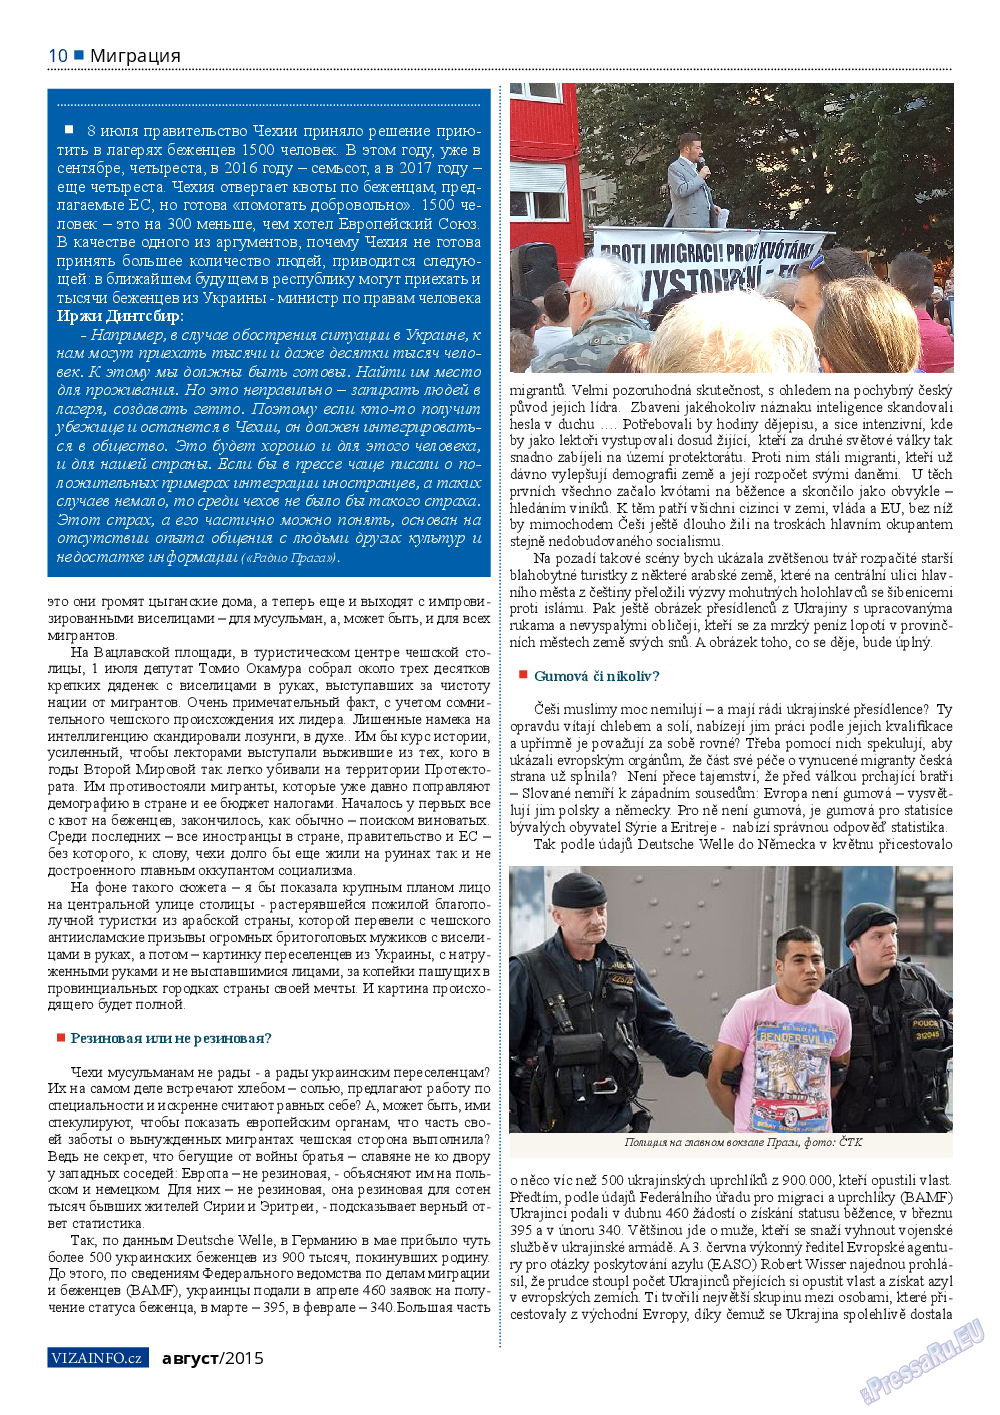 Vizainfo.cz, газета. 2015 №71 стр.10